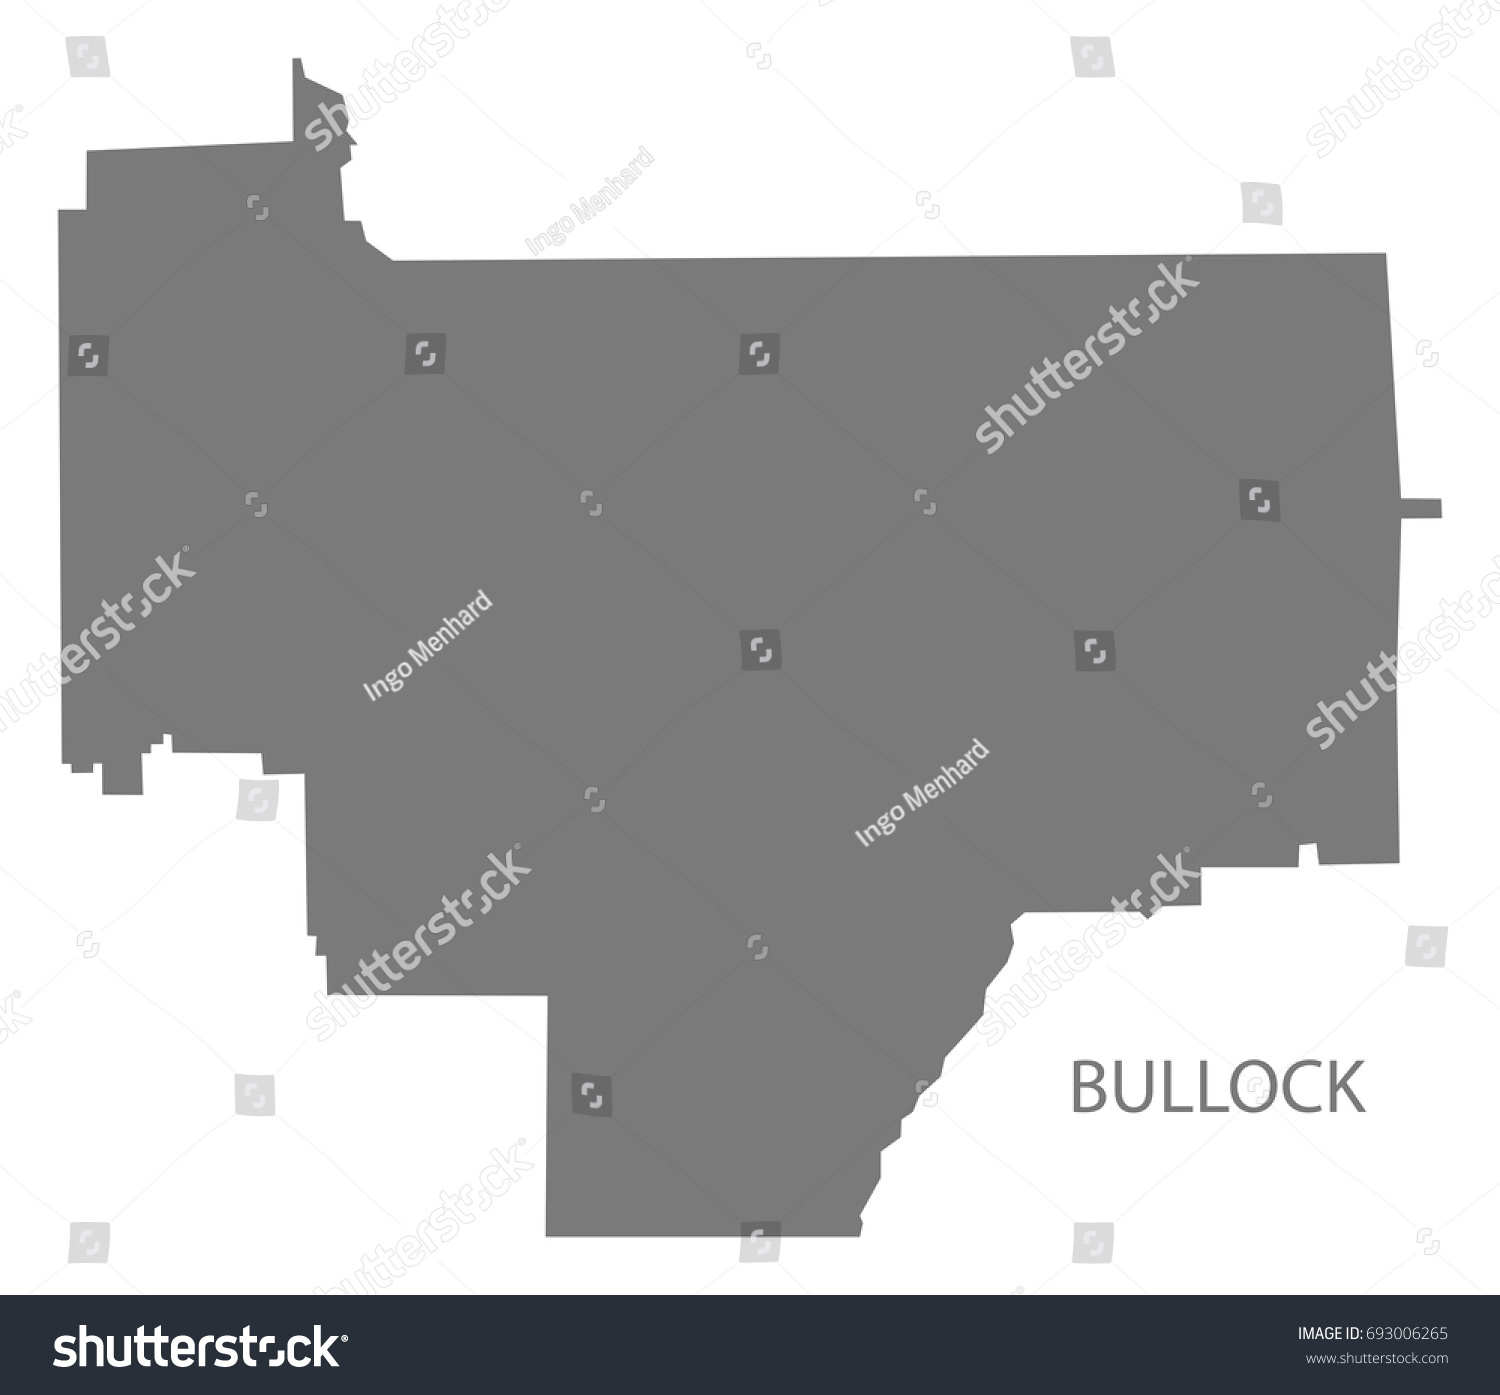 Bullock County Map Of Alabama Usa Grey Royalty Free Stock Vector 693006265 8490